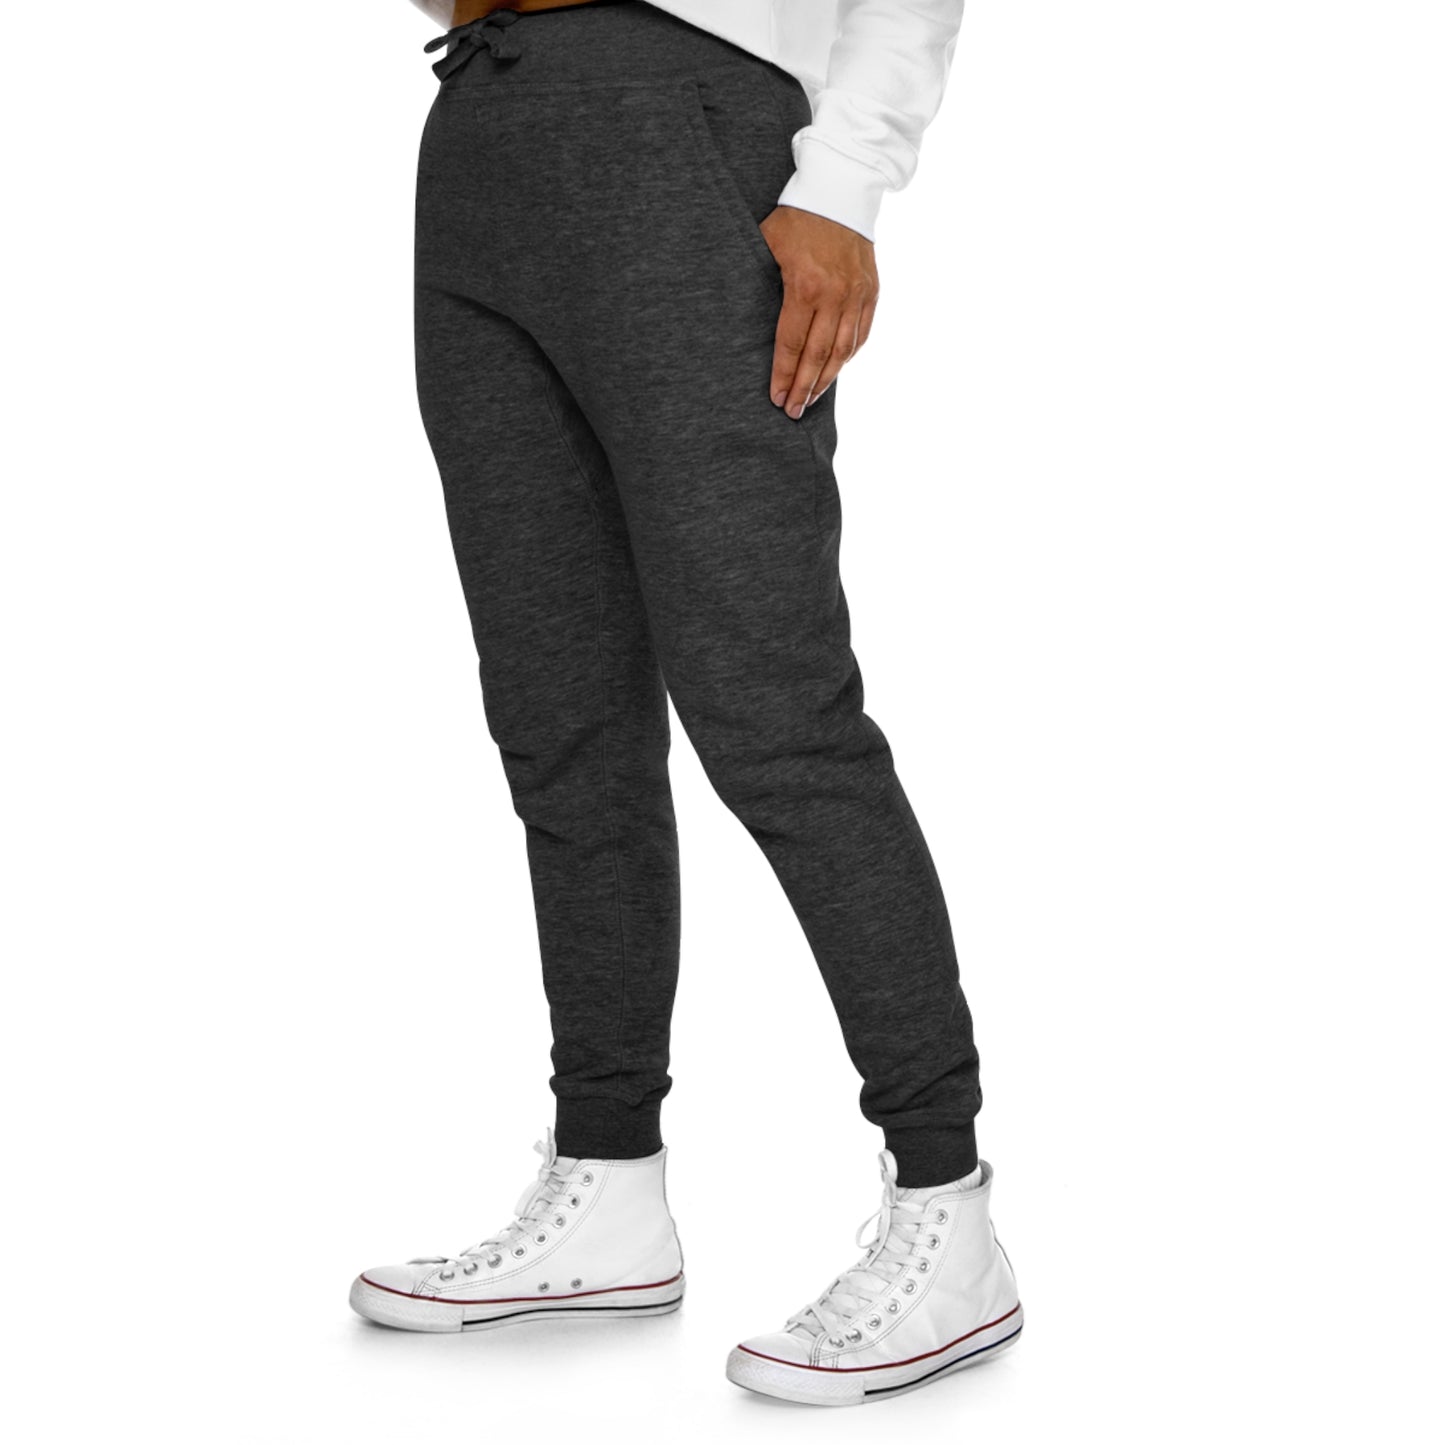 OG Grey Sweatpants